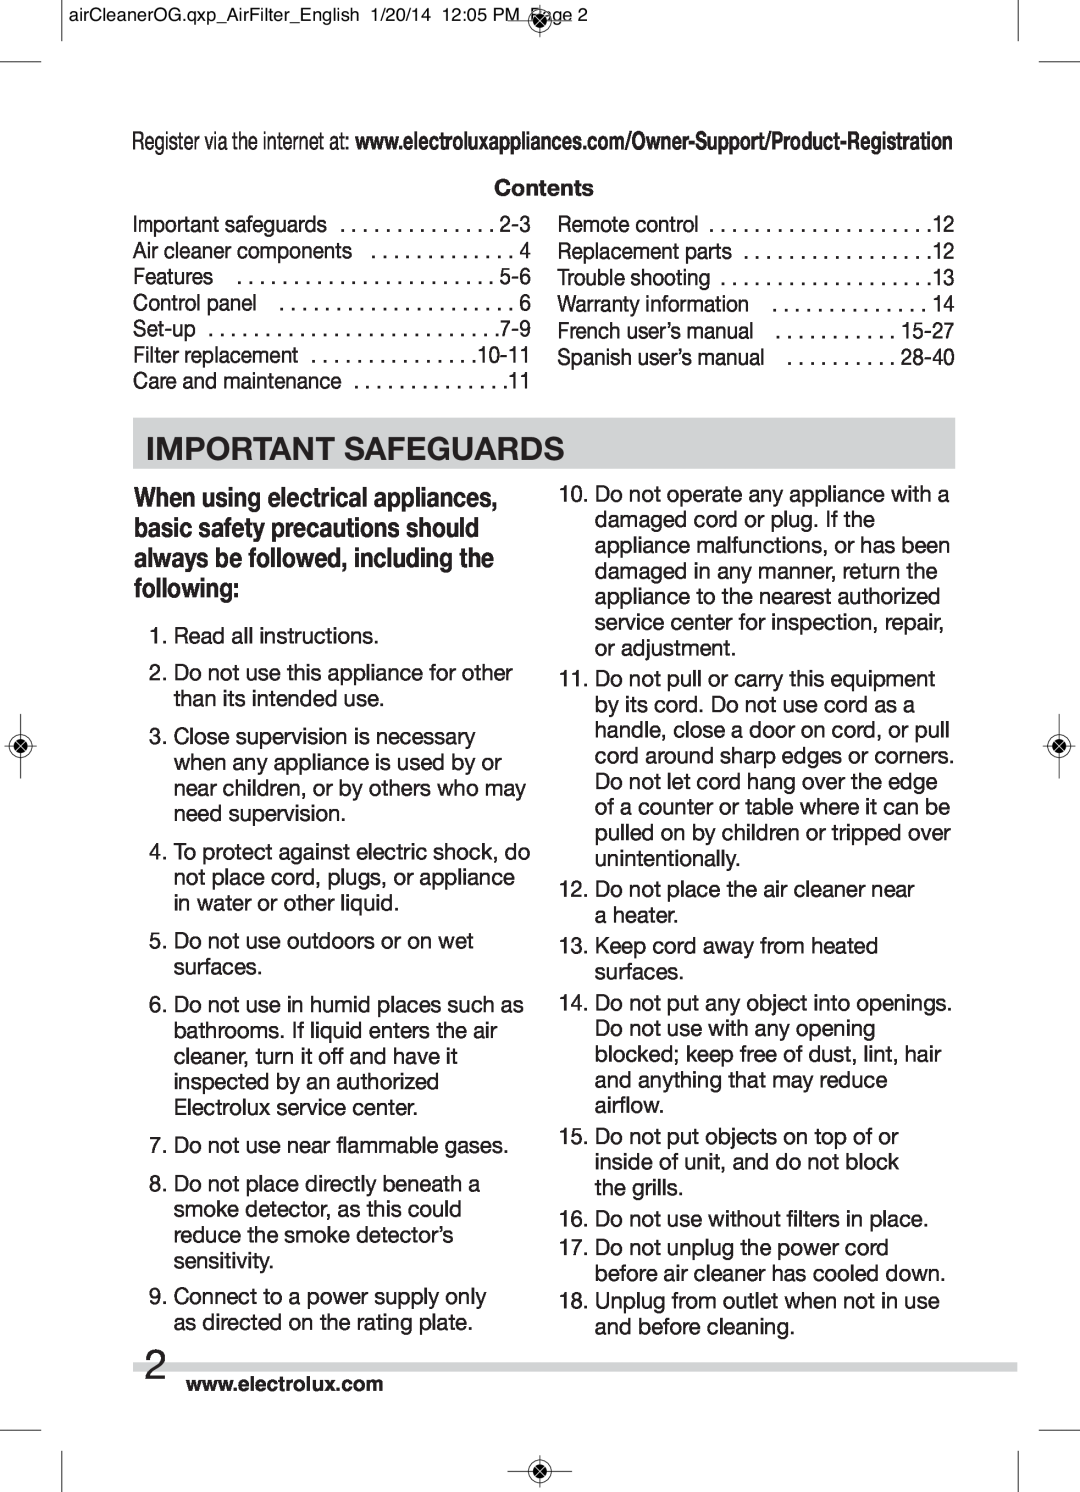 Electrolux ELAP15, ELAP40, ELAP45, ELAP30 manual Important Safeguards, Contents 